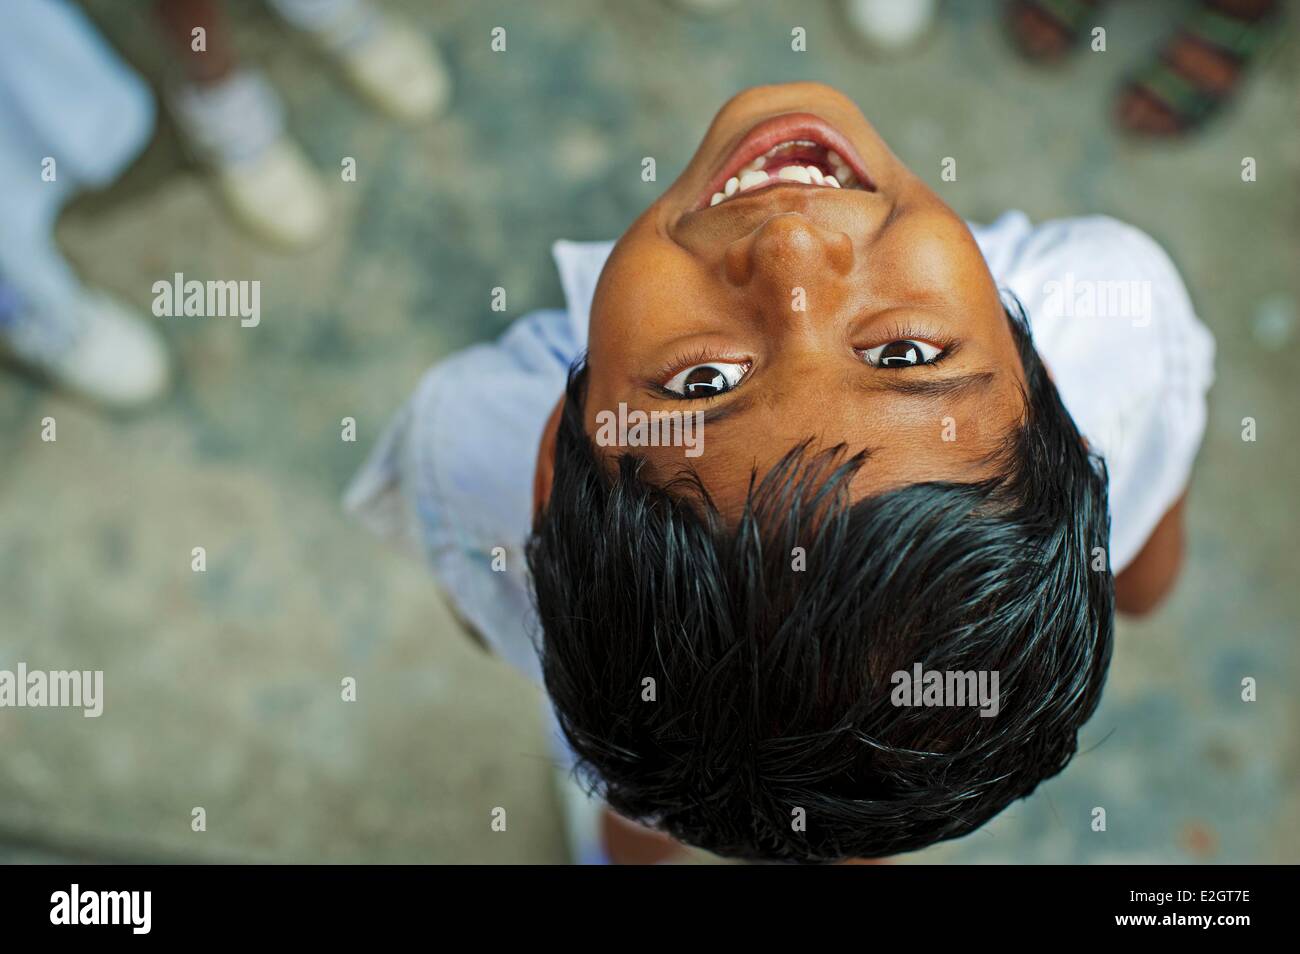 India Andaman Islands Havelock portrait of school boy Stock Photo